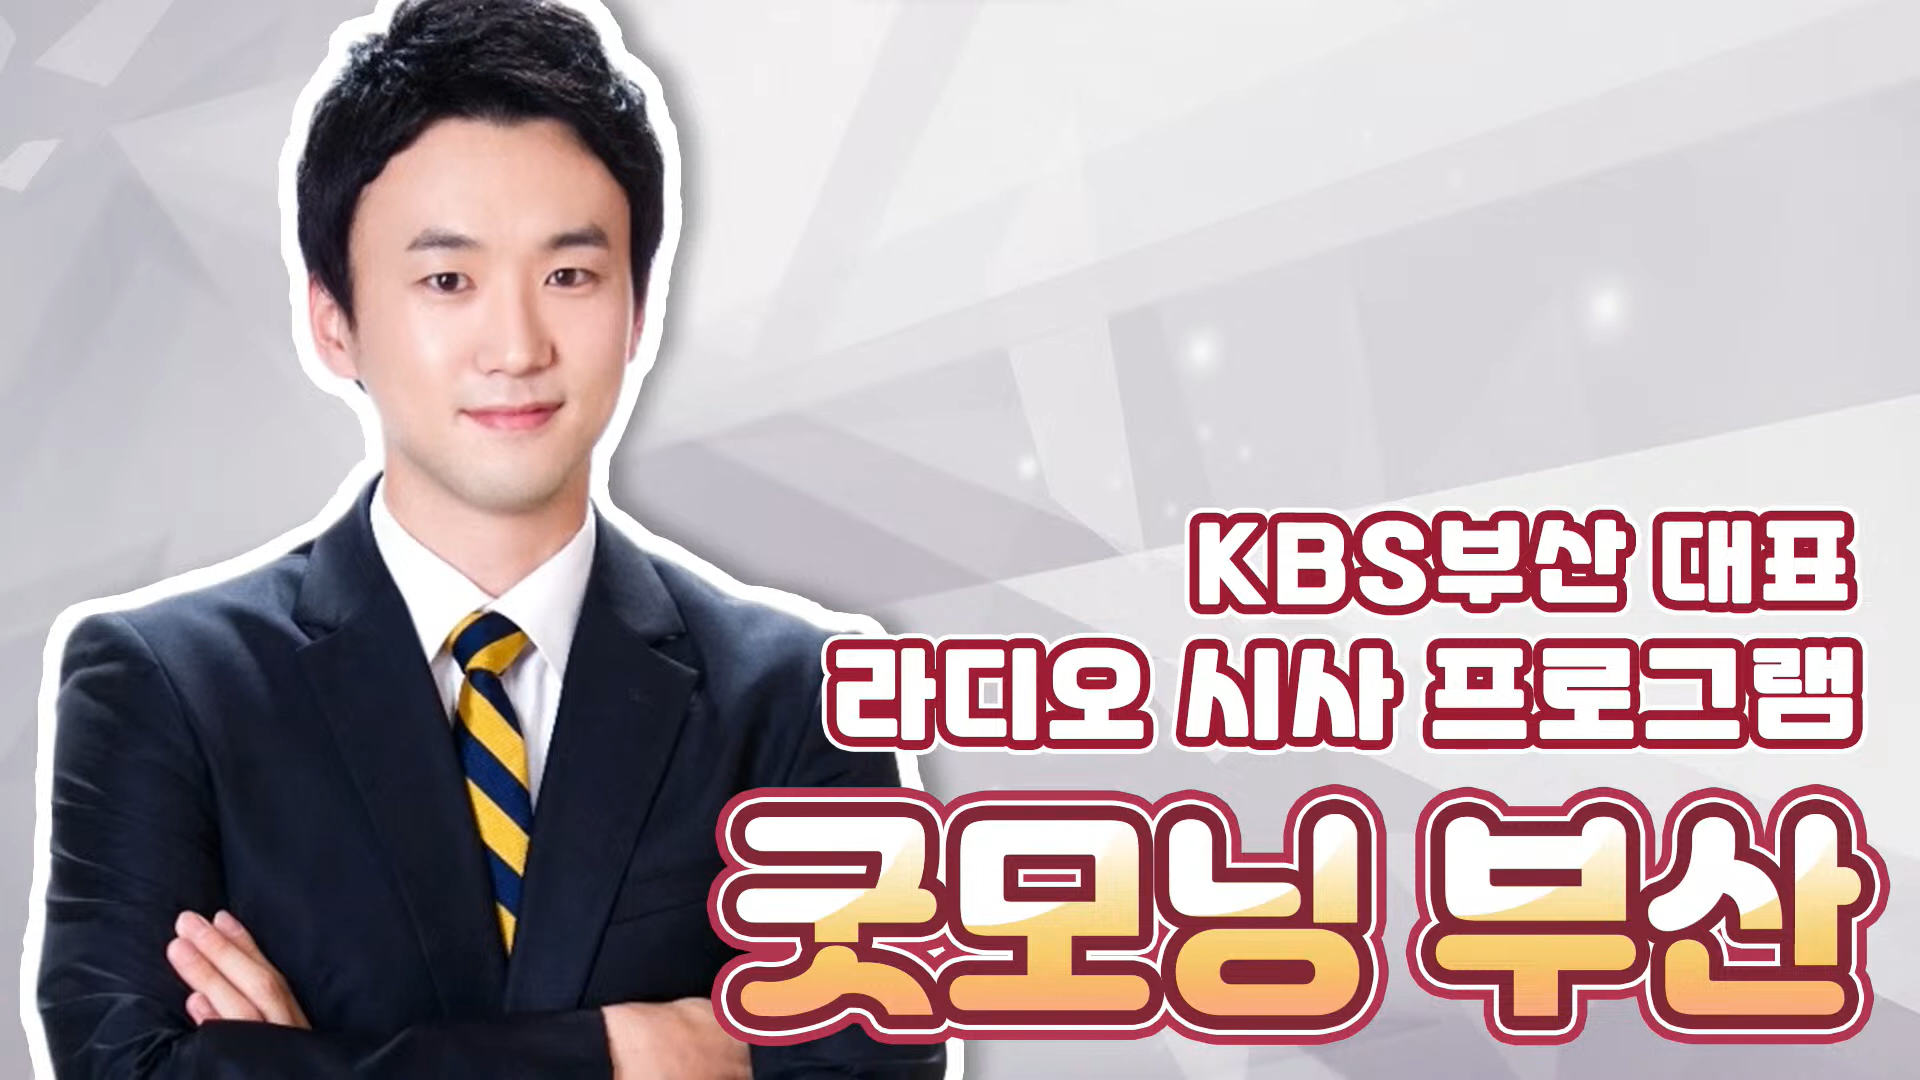 KBS 라디오 굿모닝 부산 전화인터뷰 1